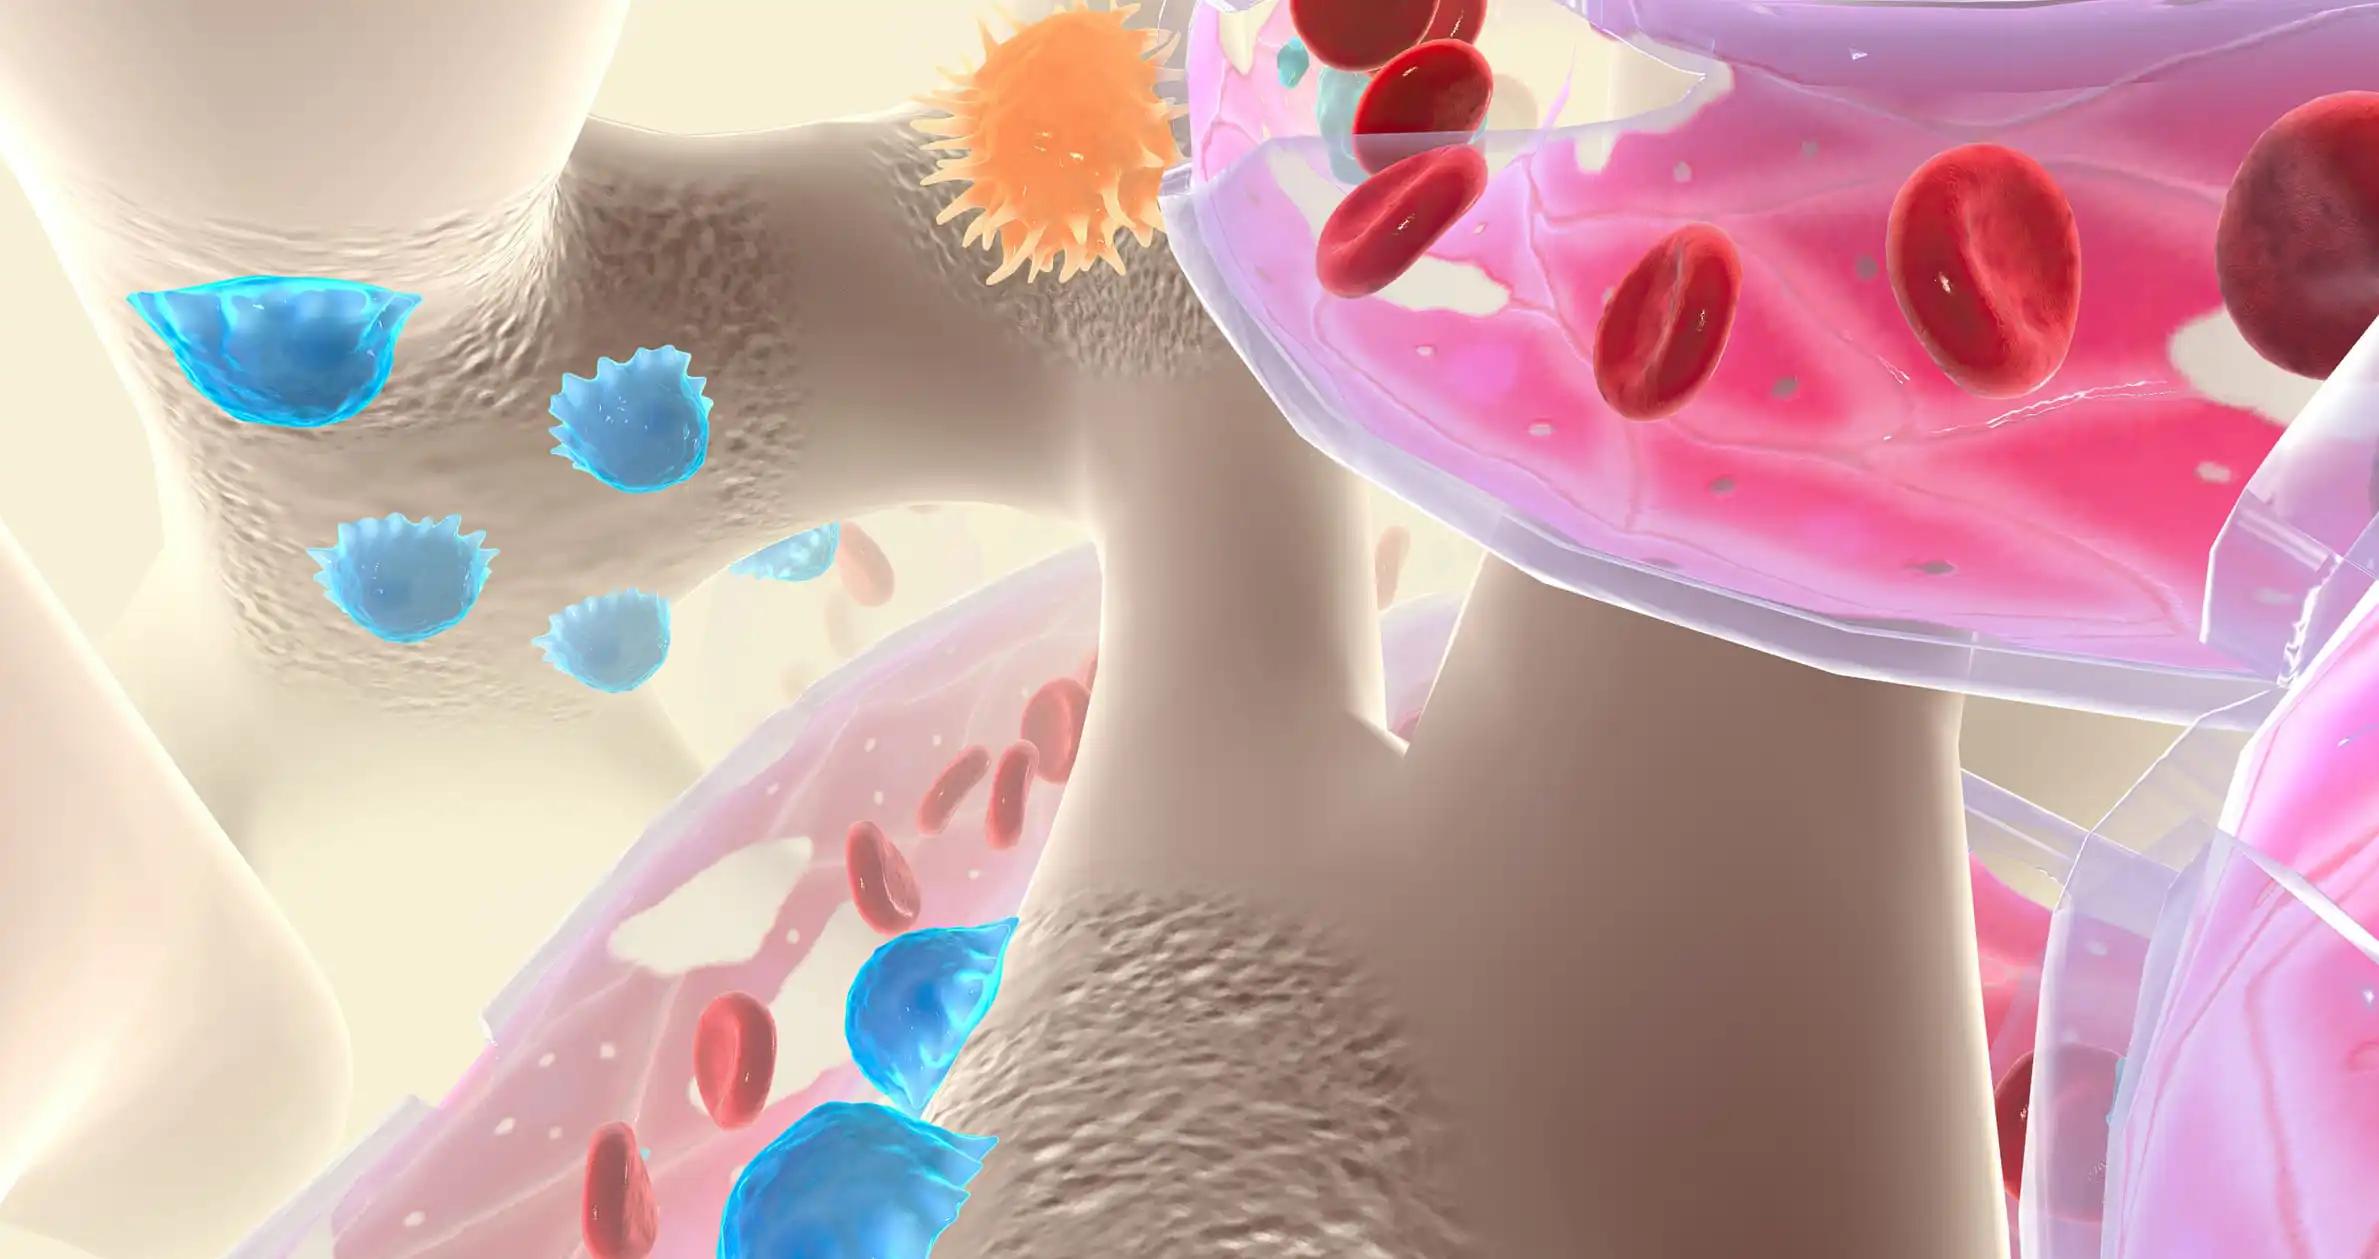 Lymphoblasts Invaded Bone Marrow Production of Blood Cells